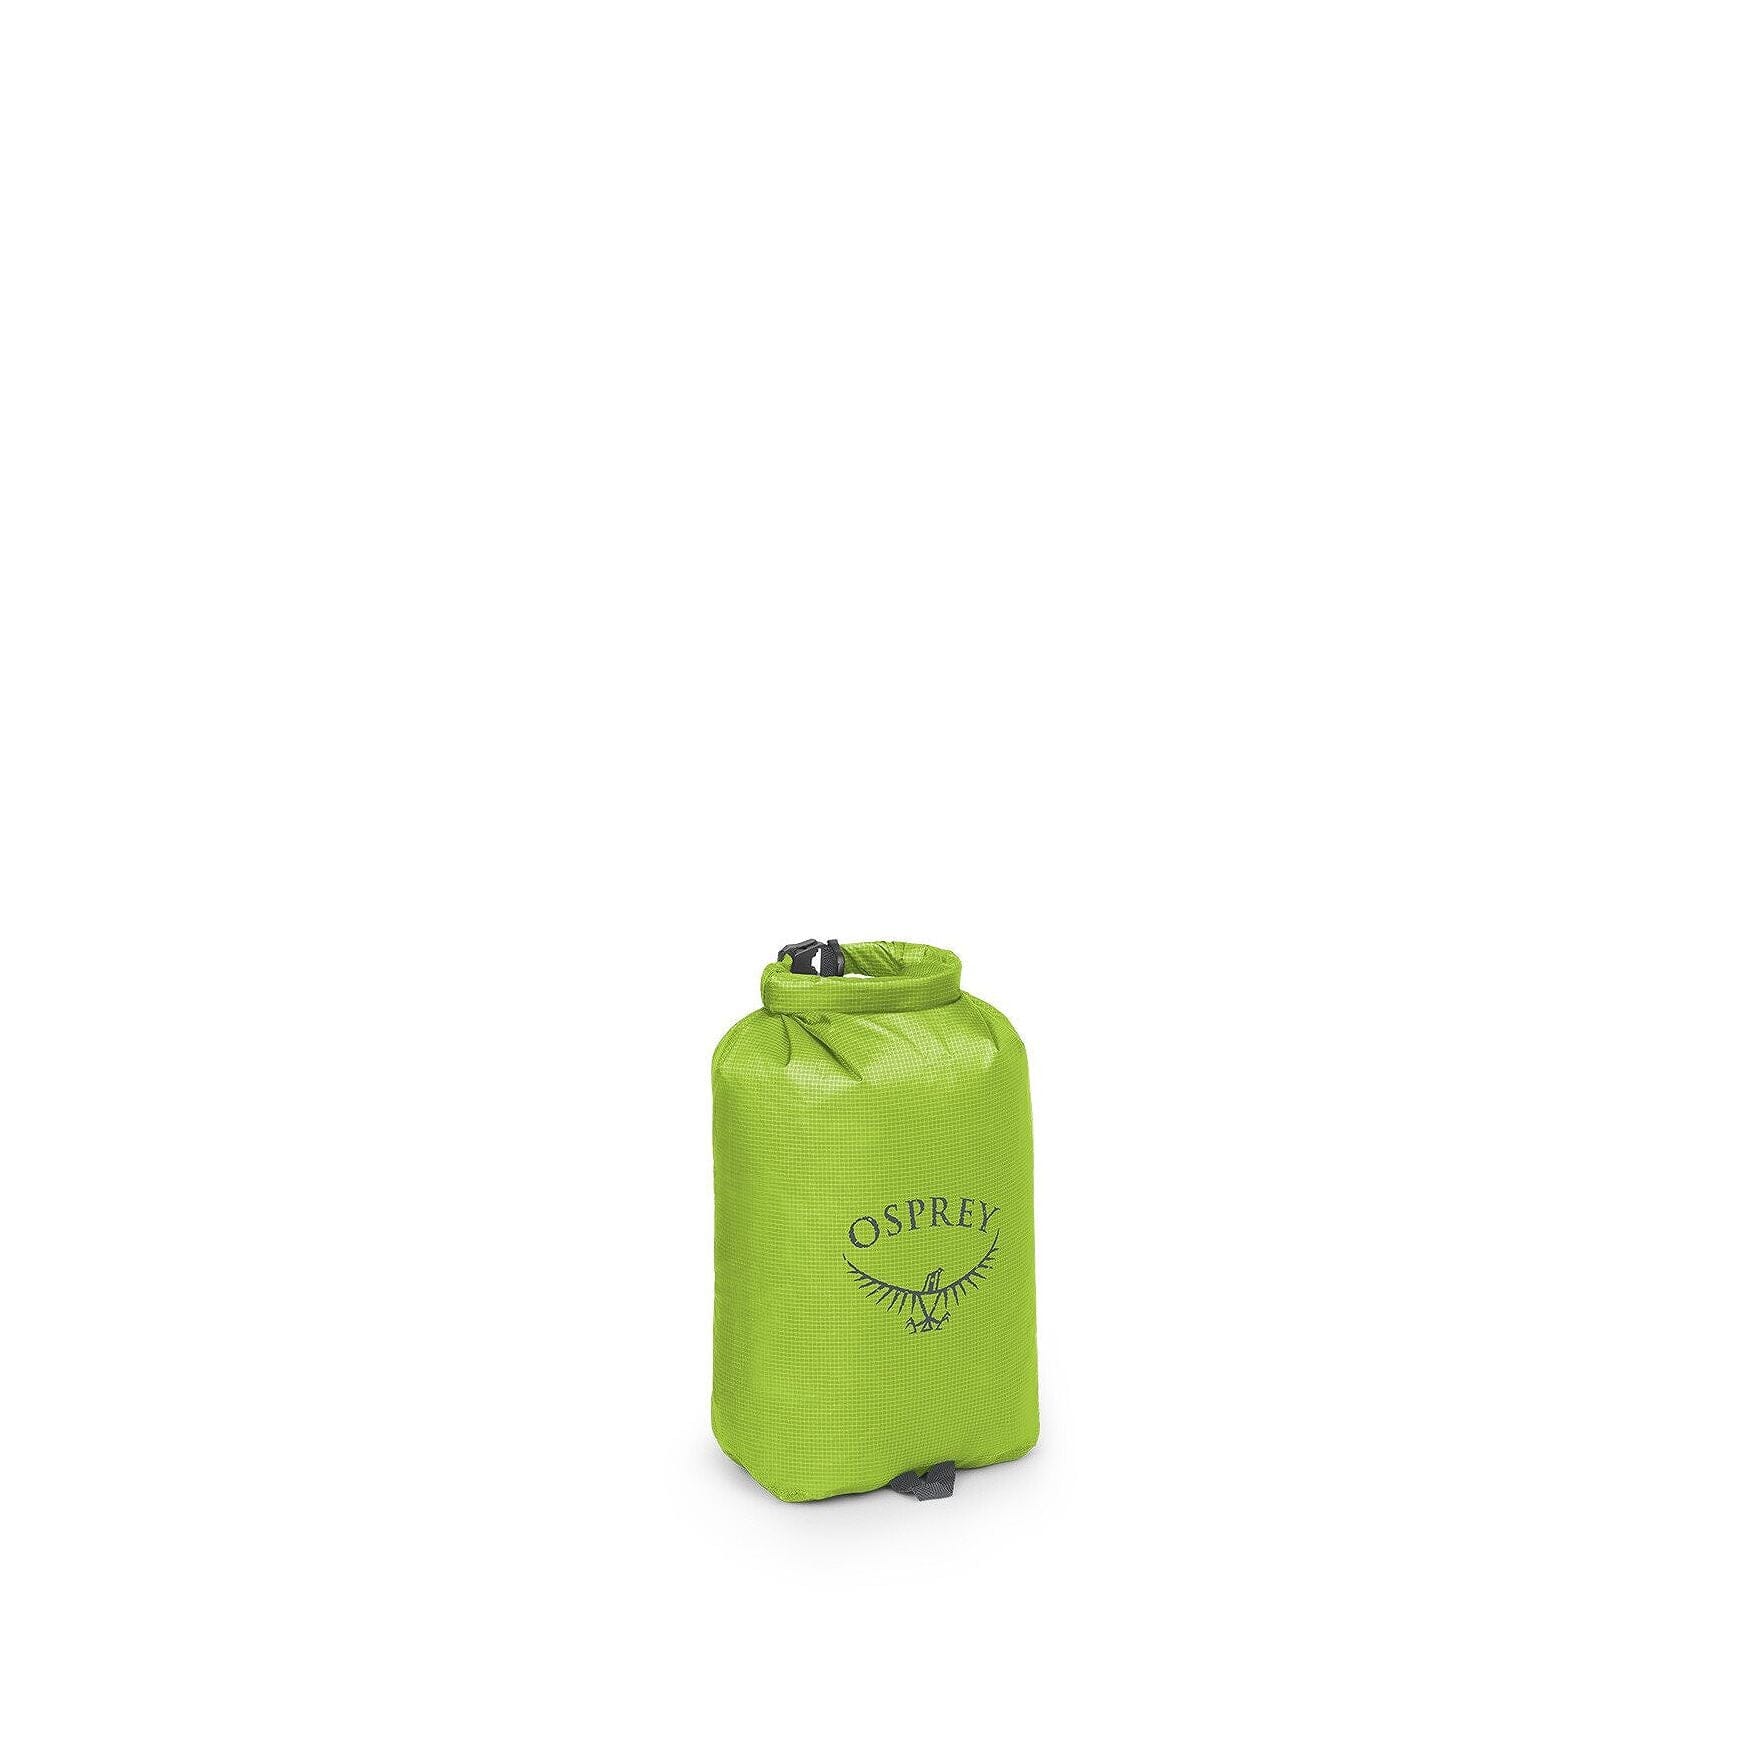 Osprey Ultralight Dry Sack 6 Litre - Waterproof Stuff Sack Limon Green (S24) 